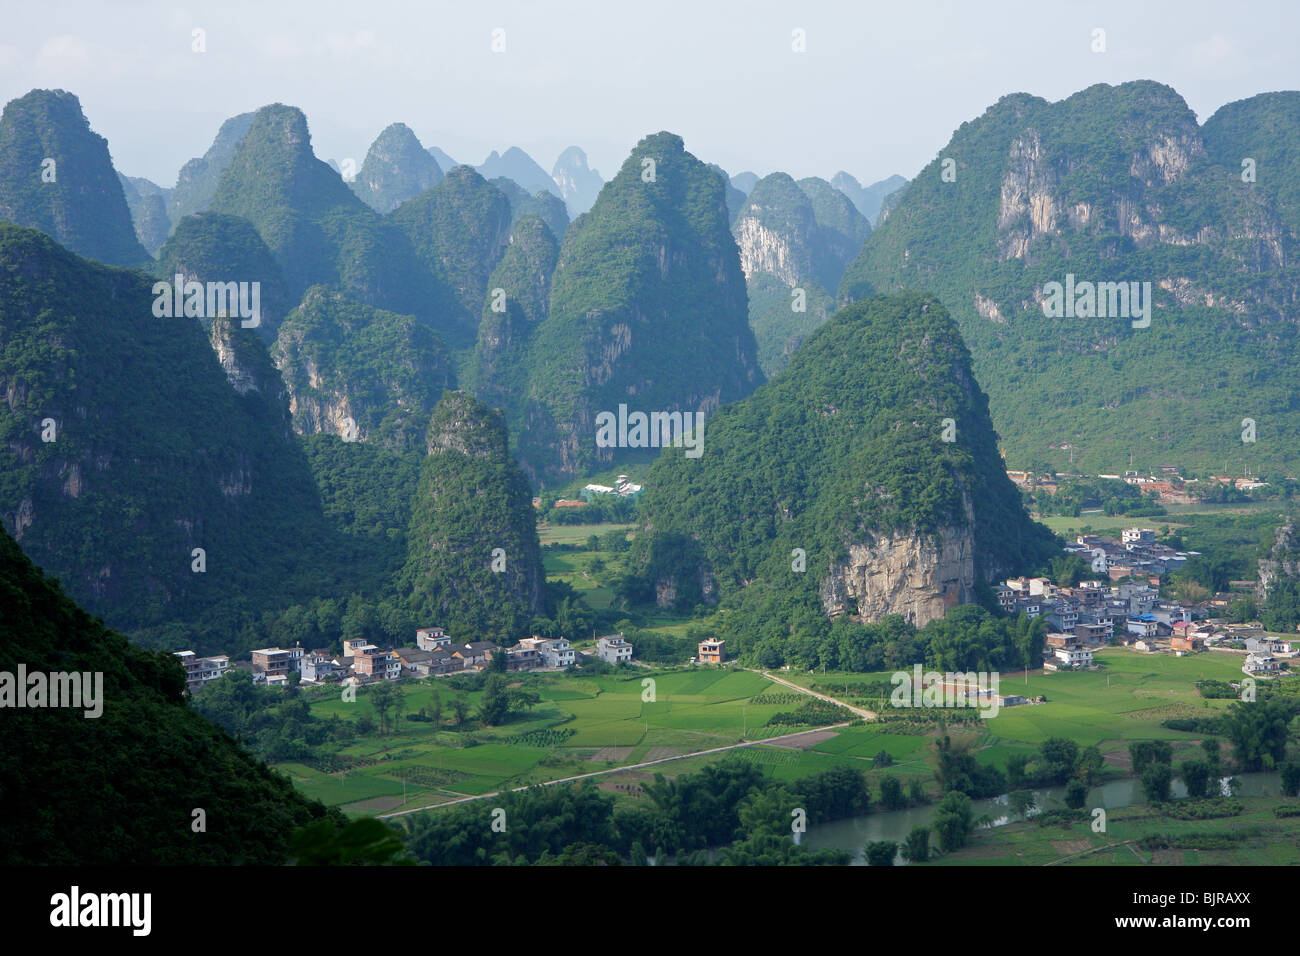 Limestone hills with rural settlements, Yangshou, Guangxi region, China Stock Photo